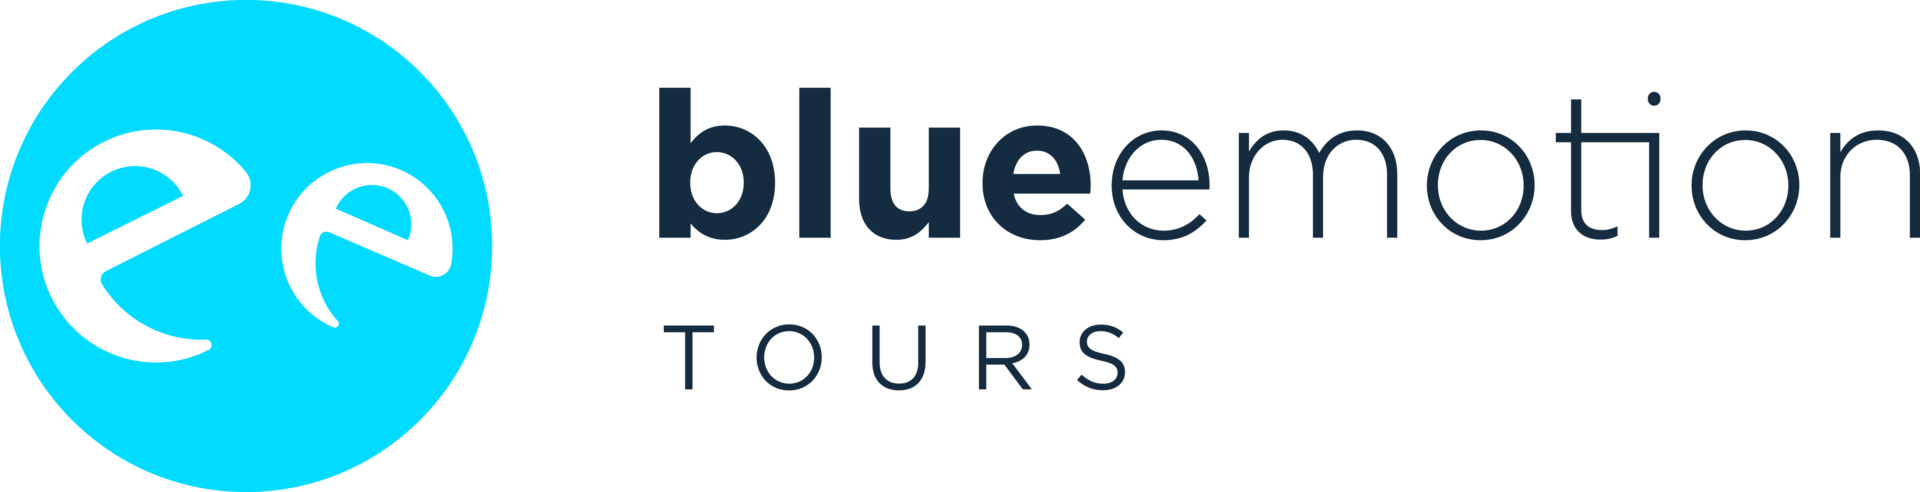 Blue Emotion Tours logo-1